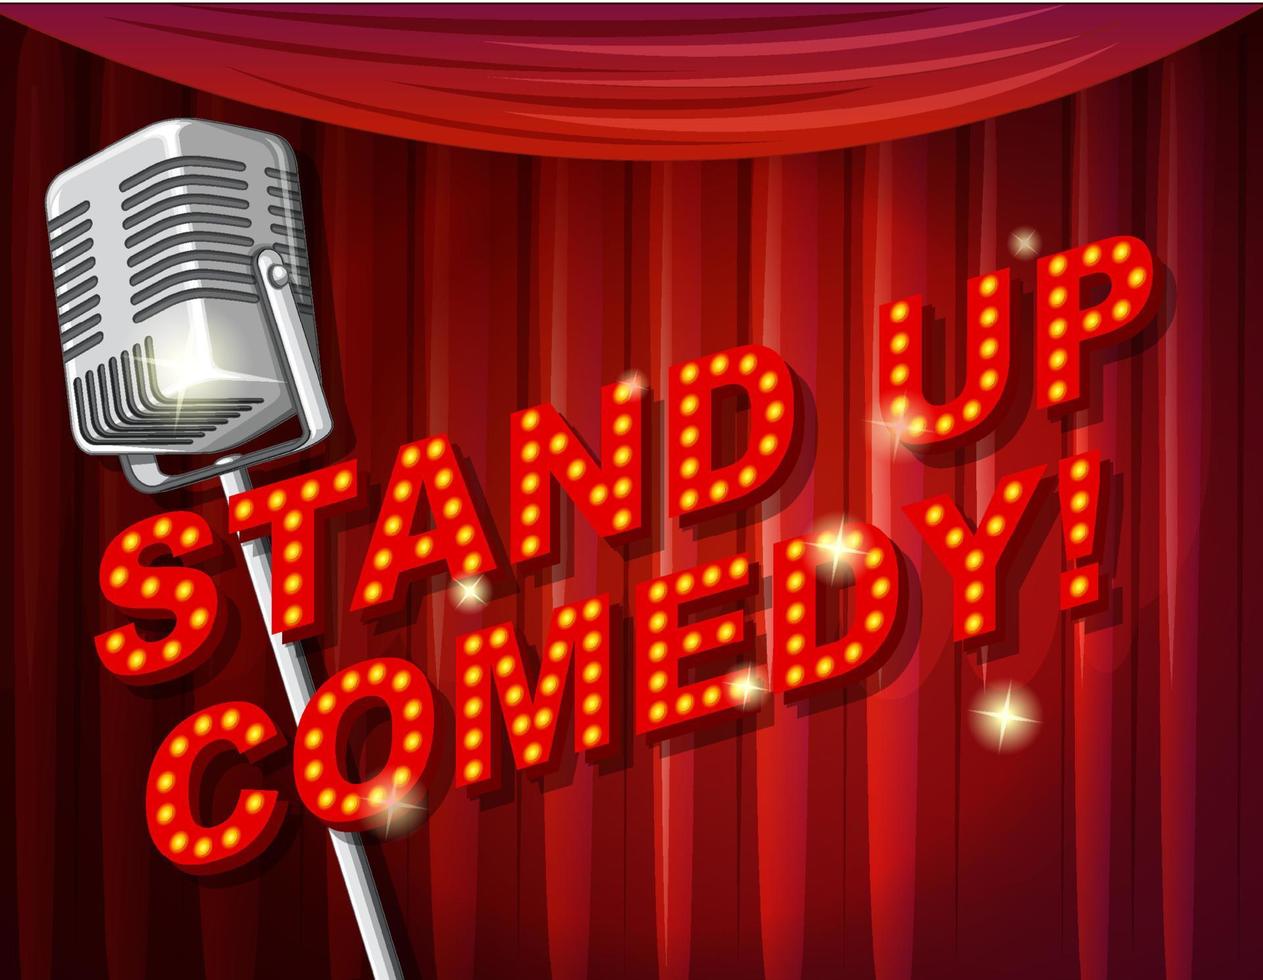 banner de stand up comedy com microfone vintage vetor